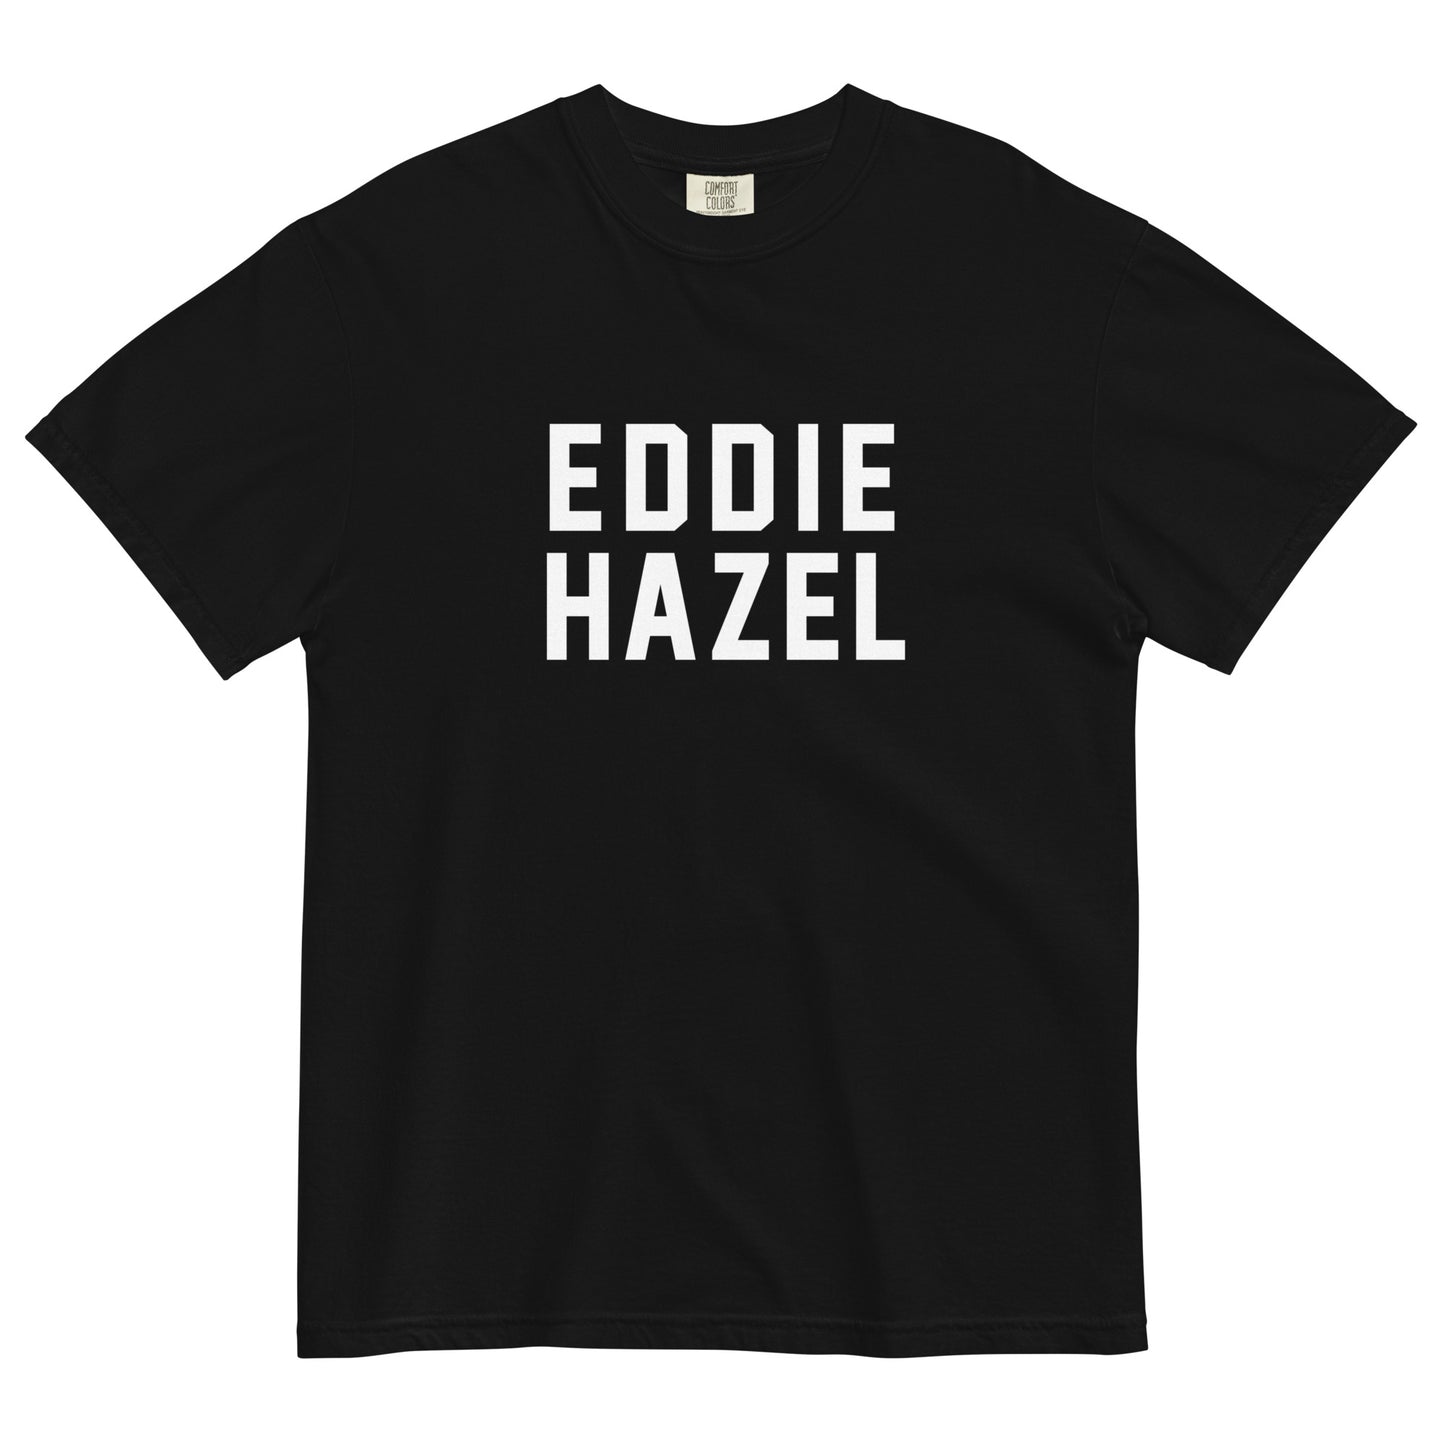 EDDIE HAZEL